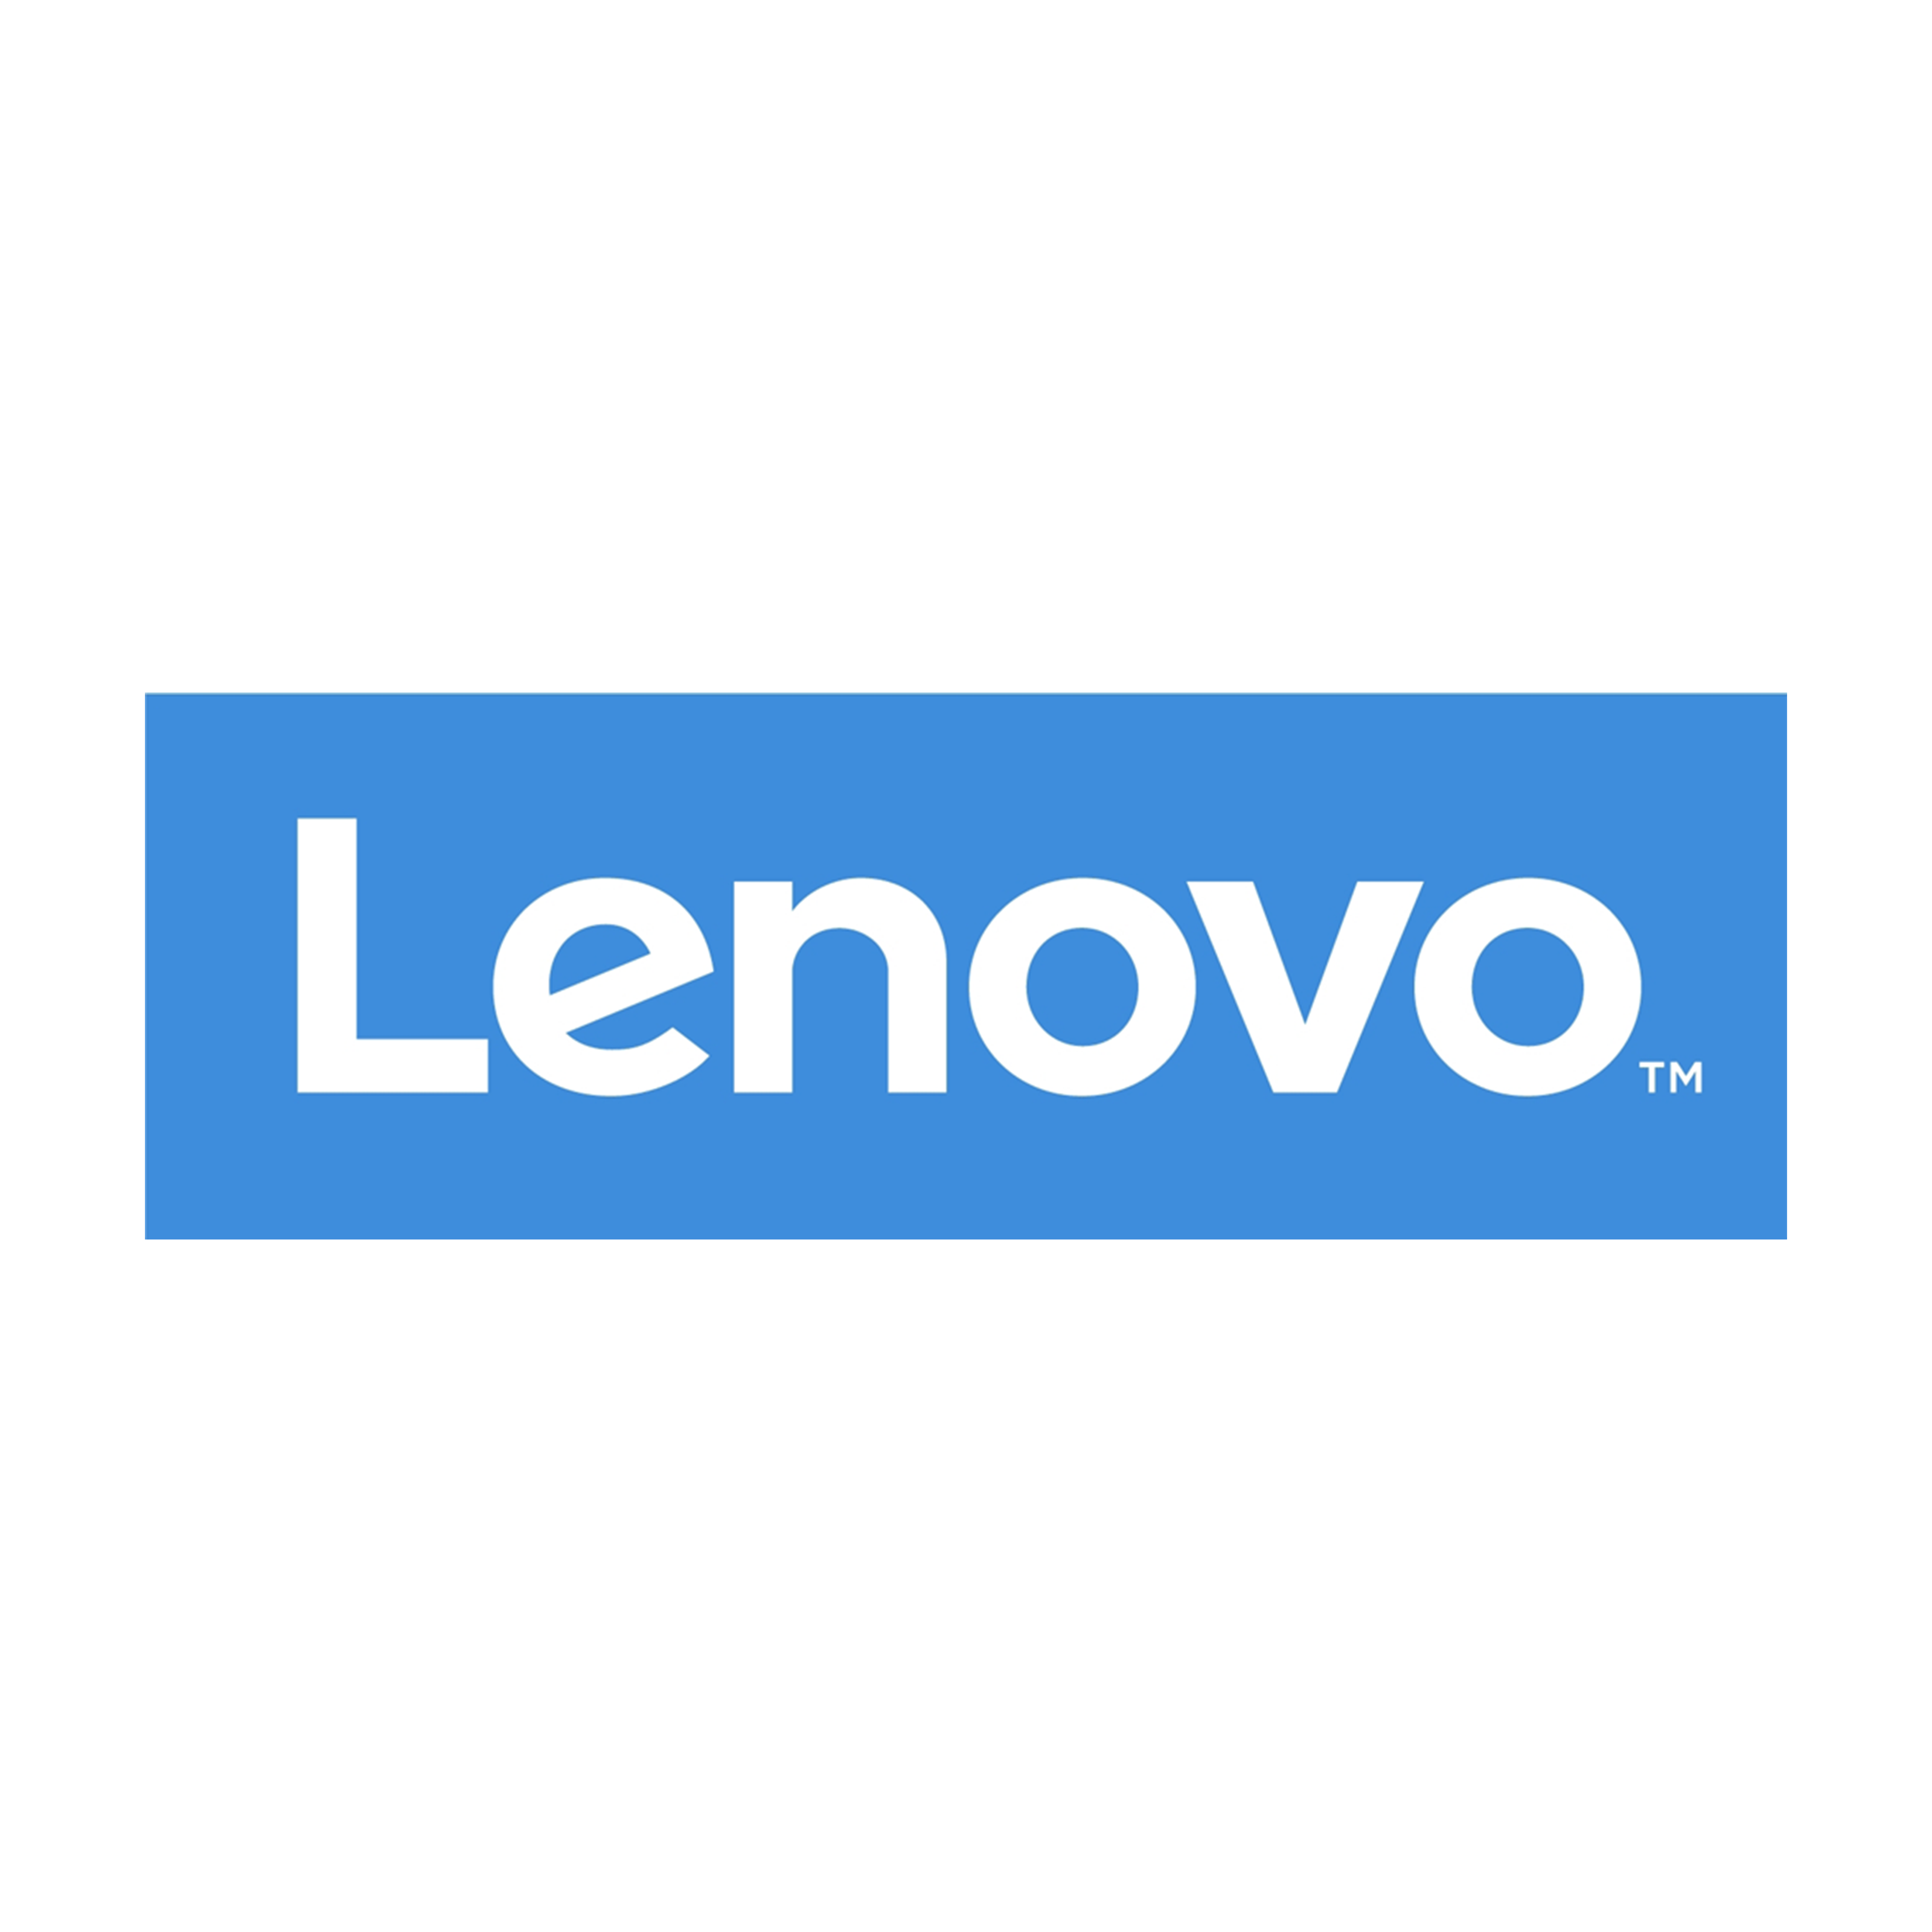 Lenovo-Background-PNG-Image